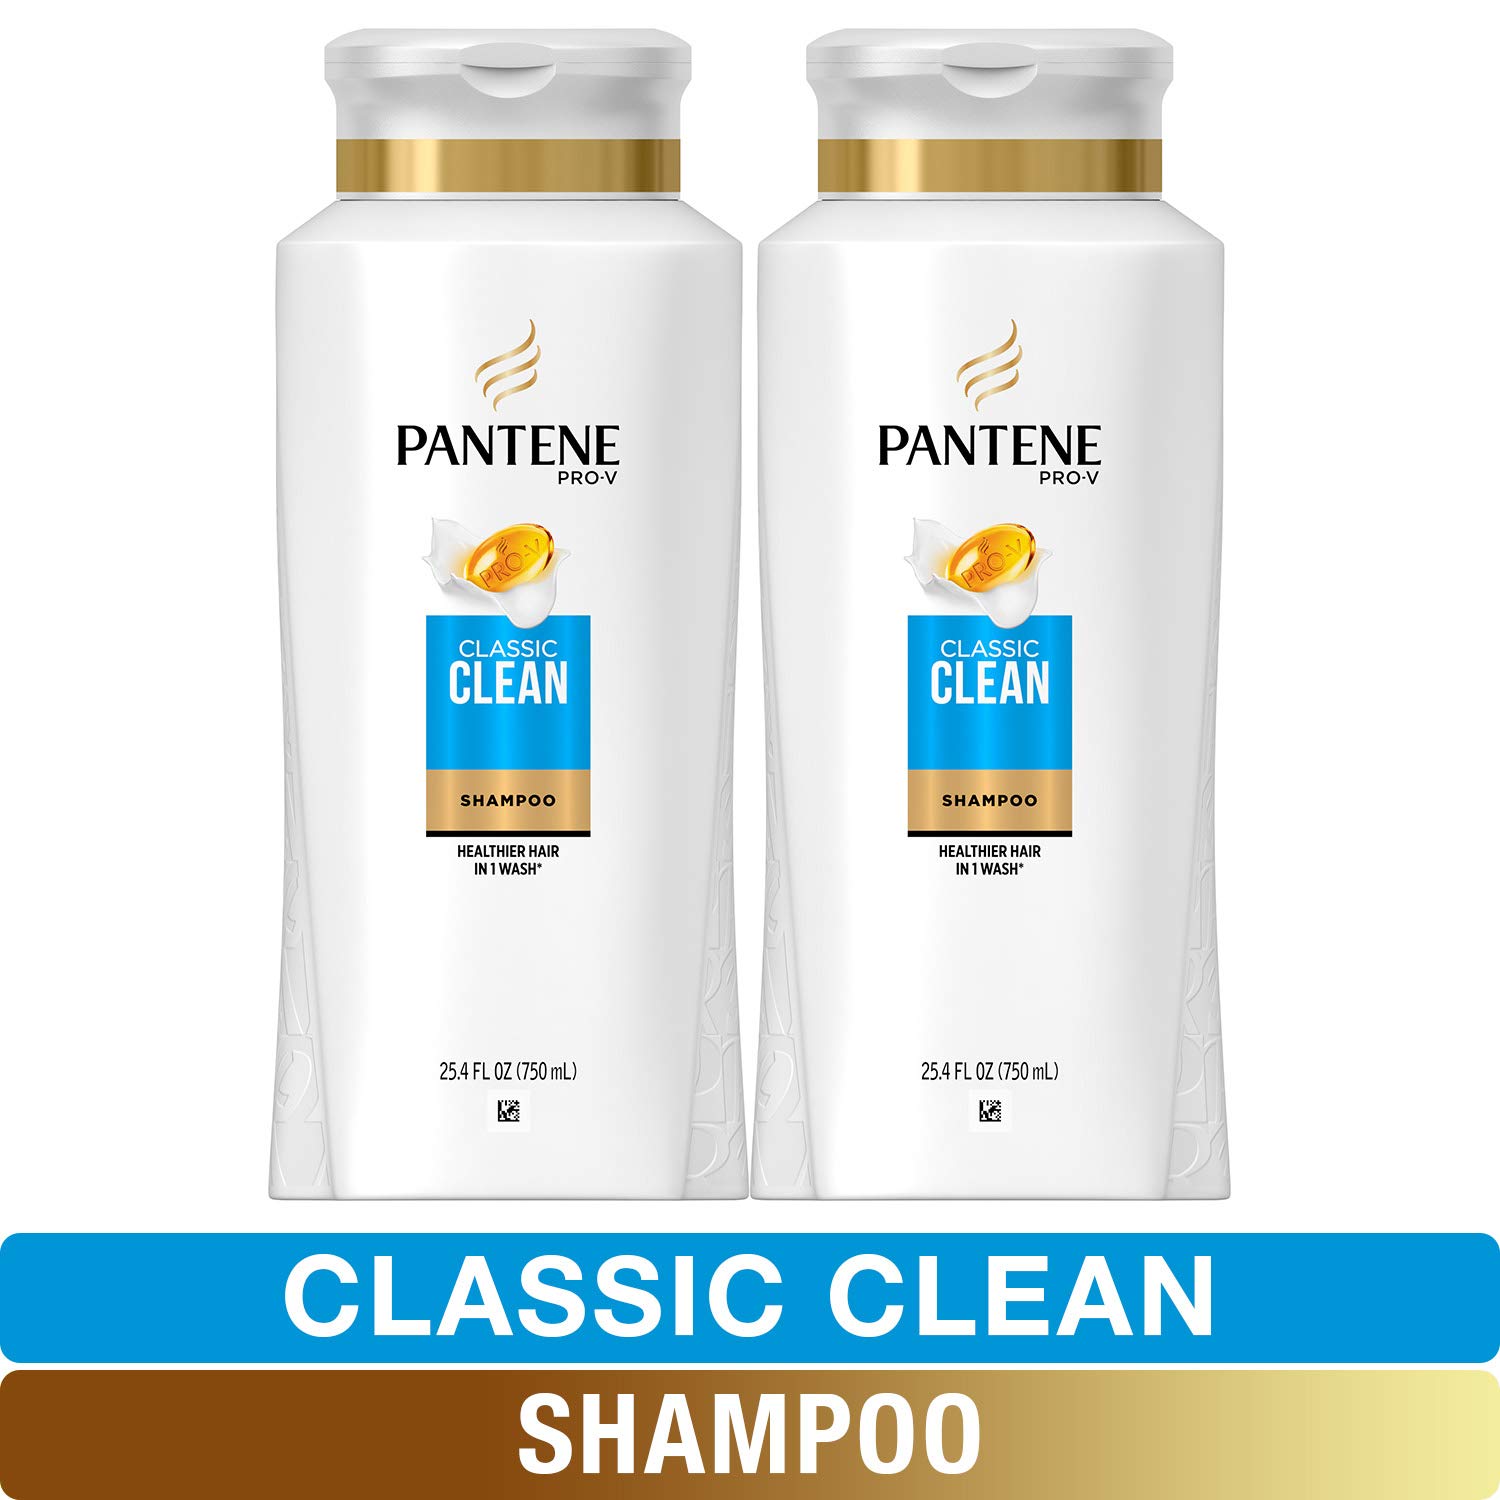 Pantene Shampoo Deal on Amazon